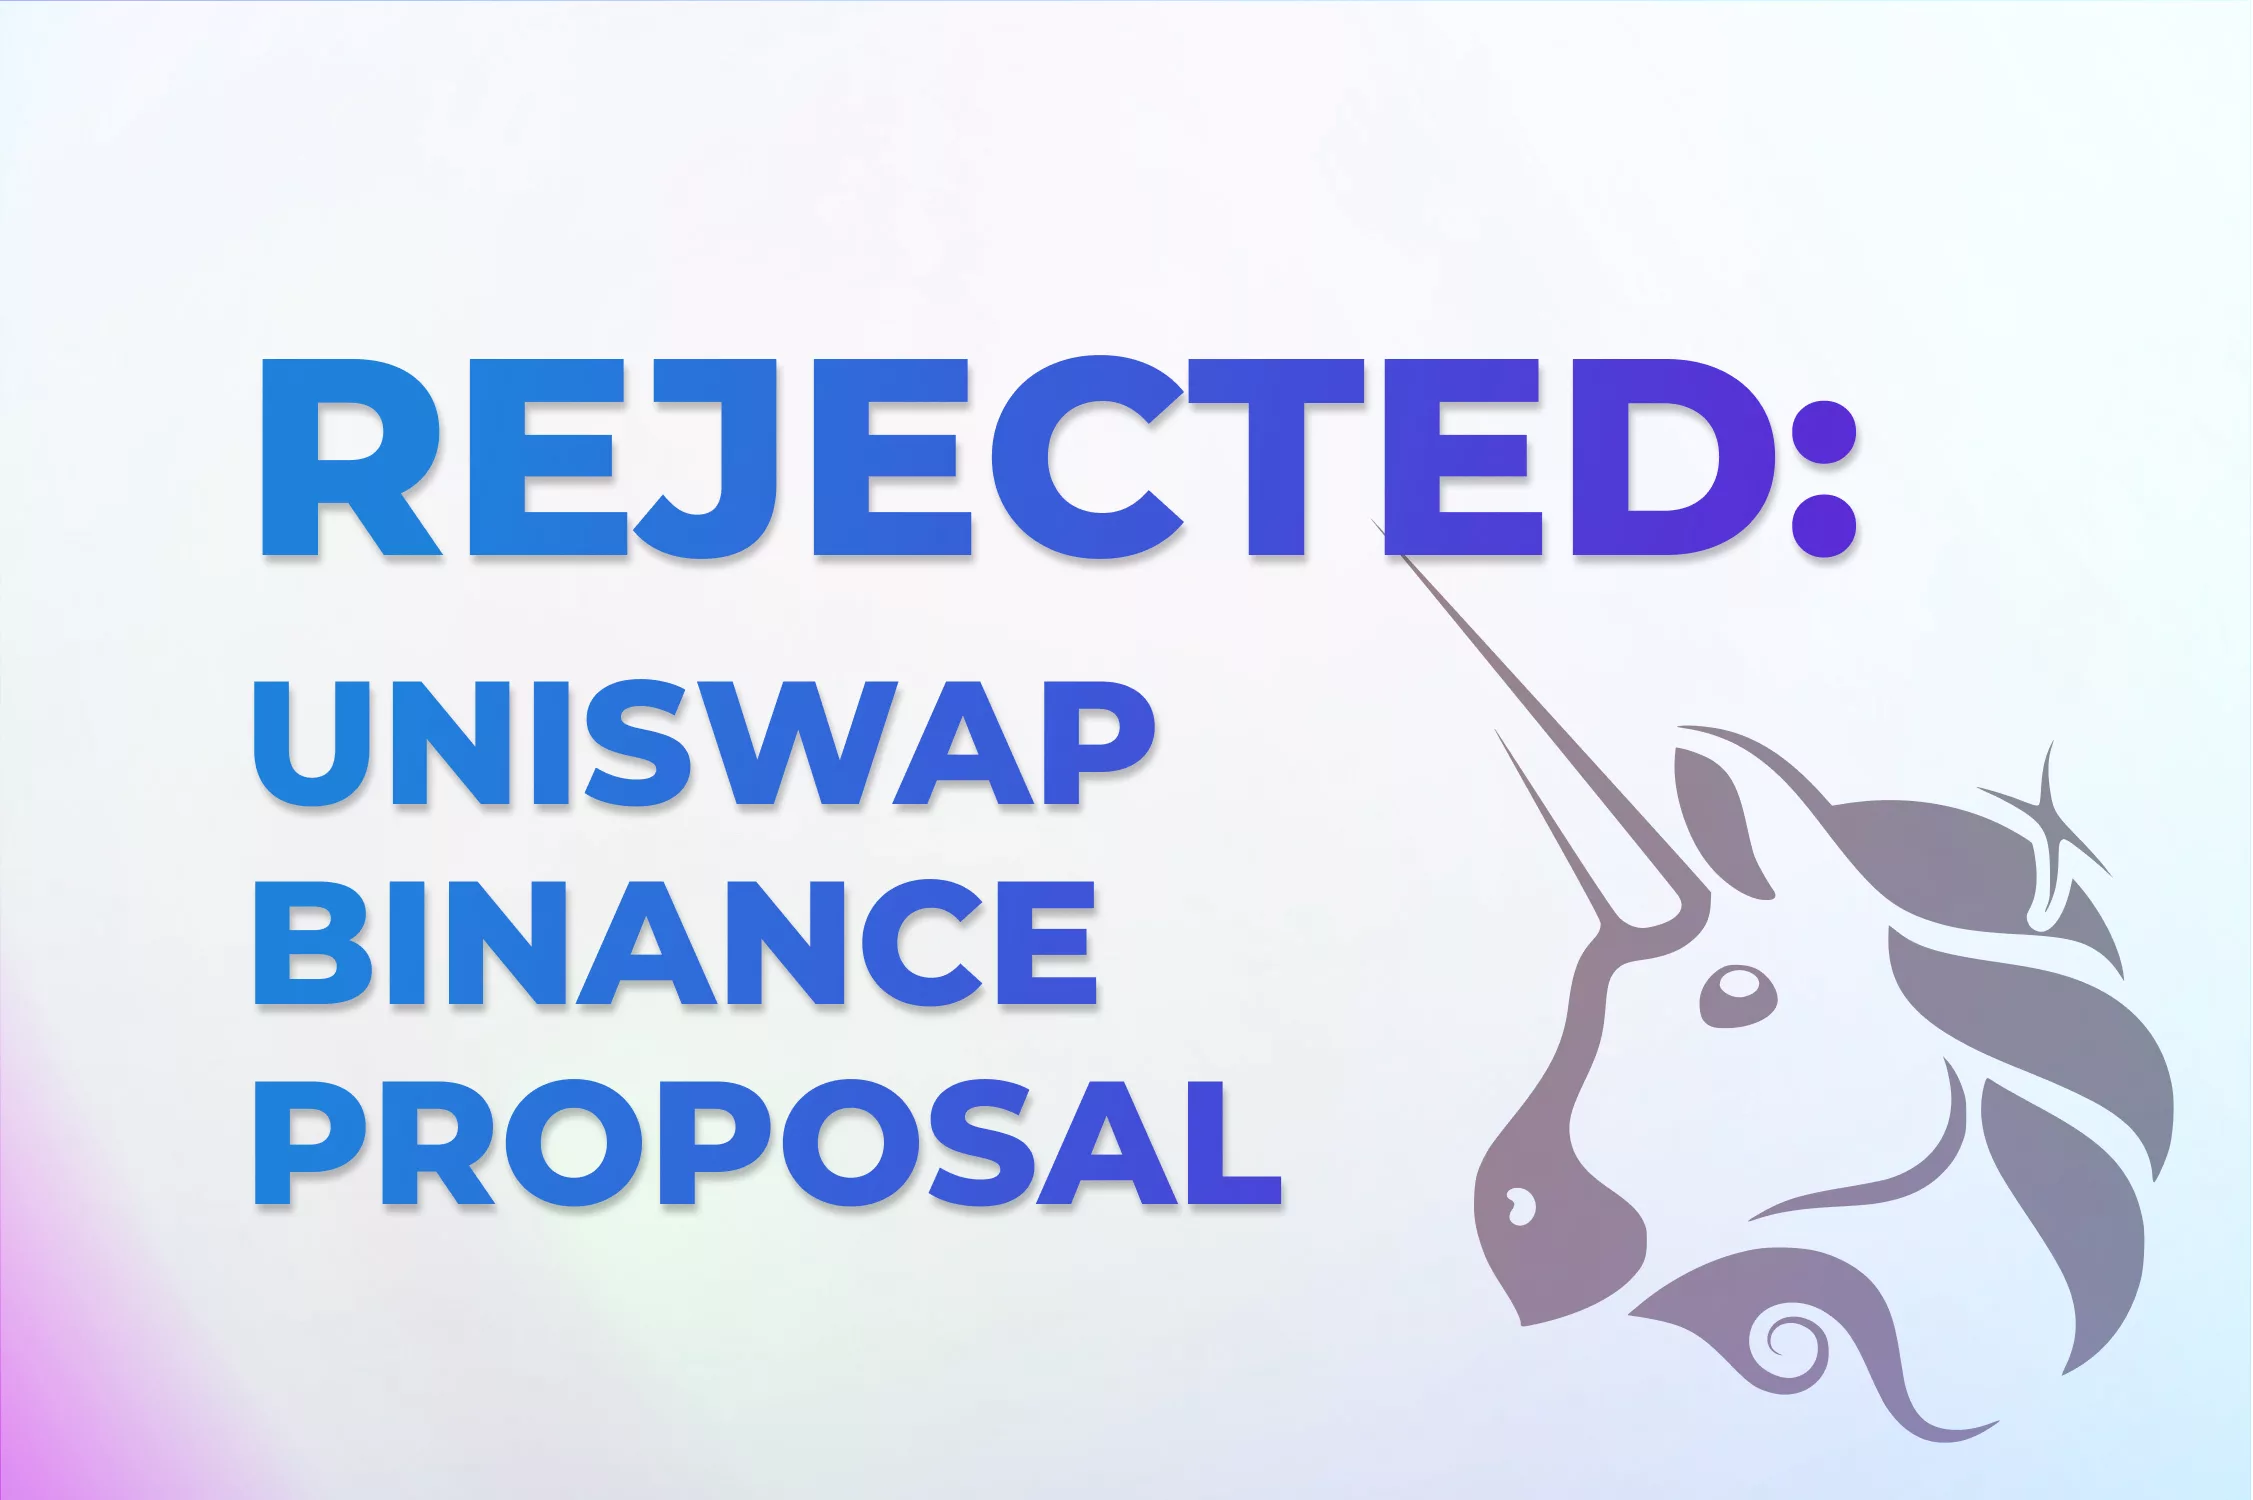 uniswap v3 binance proposal